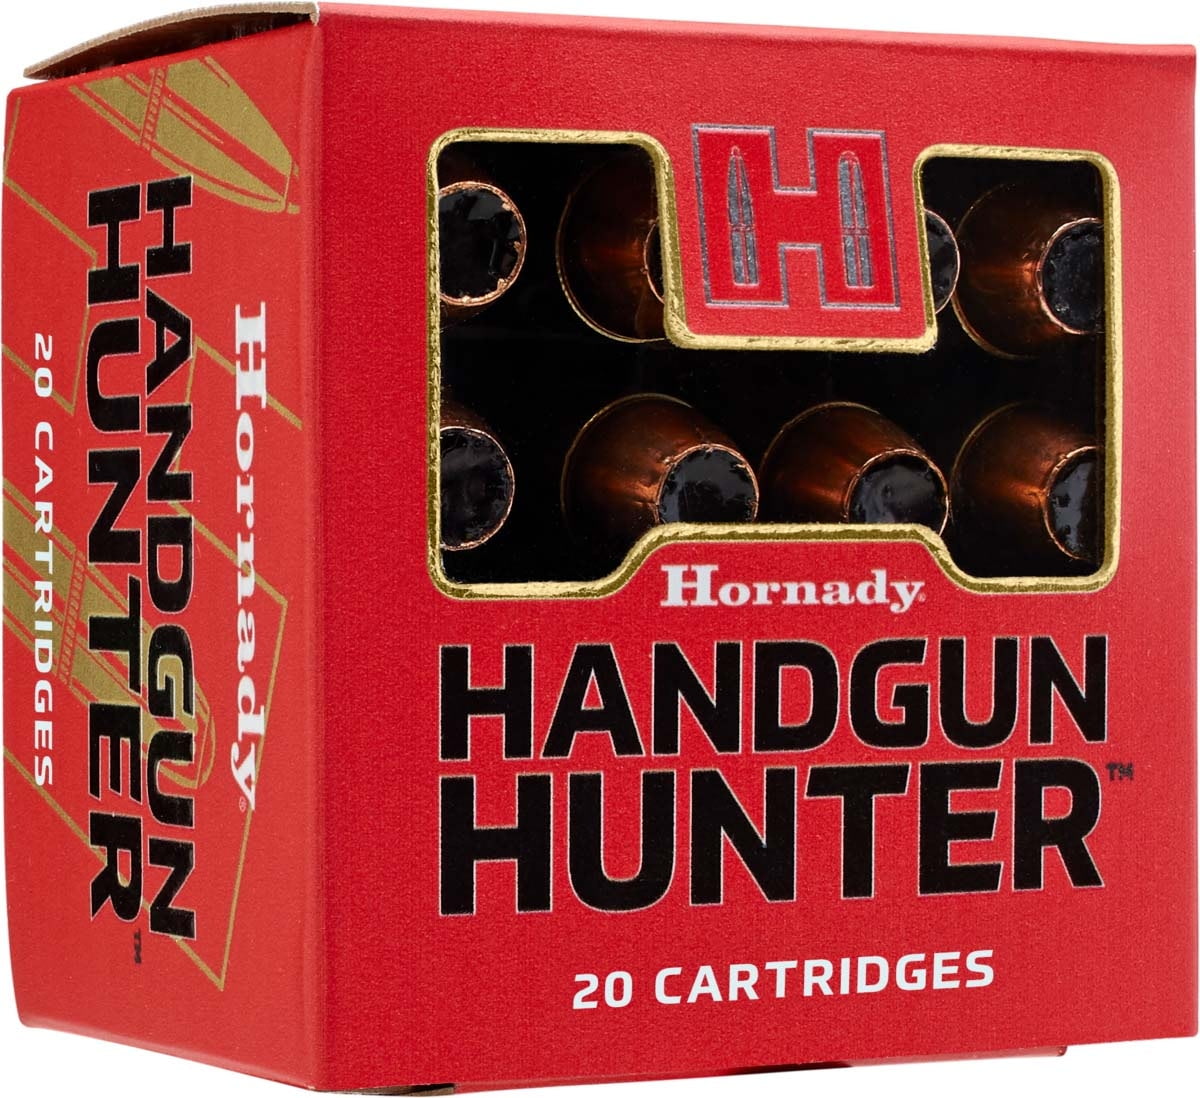 Hornady Handgun Hunter .454 Casull 200 grain Flex Tip Brass Cased Centerfire Pistol Ammunition